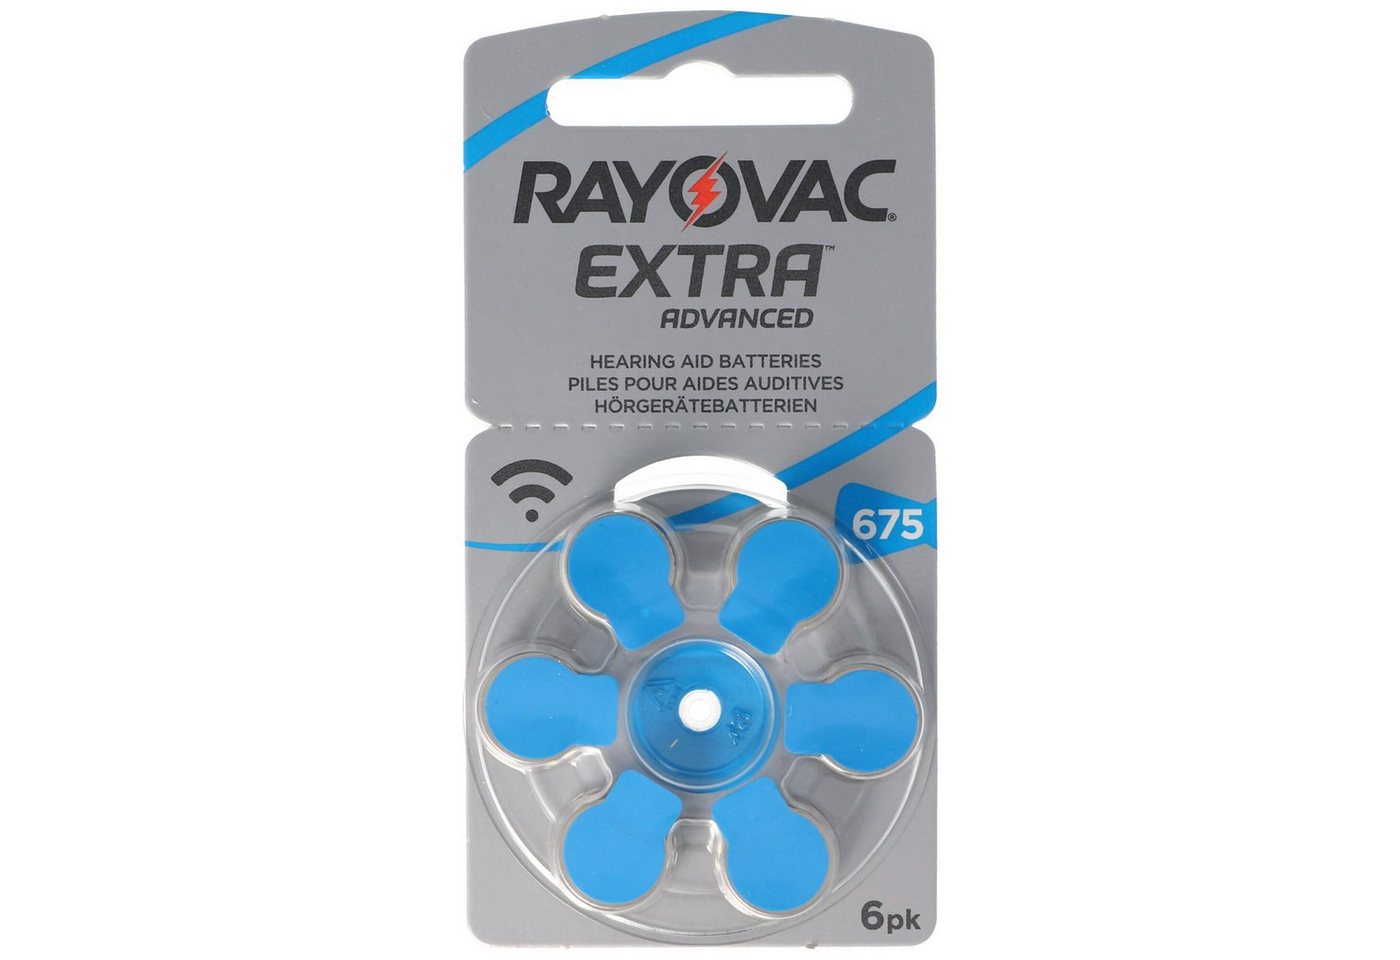 RAYOVAC Rayovac Extra Advanced Hörgerätebatterie HA675, PR44, 4600, Acoustic Batterie, (1,4 V) von RAYOVAC